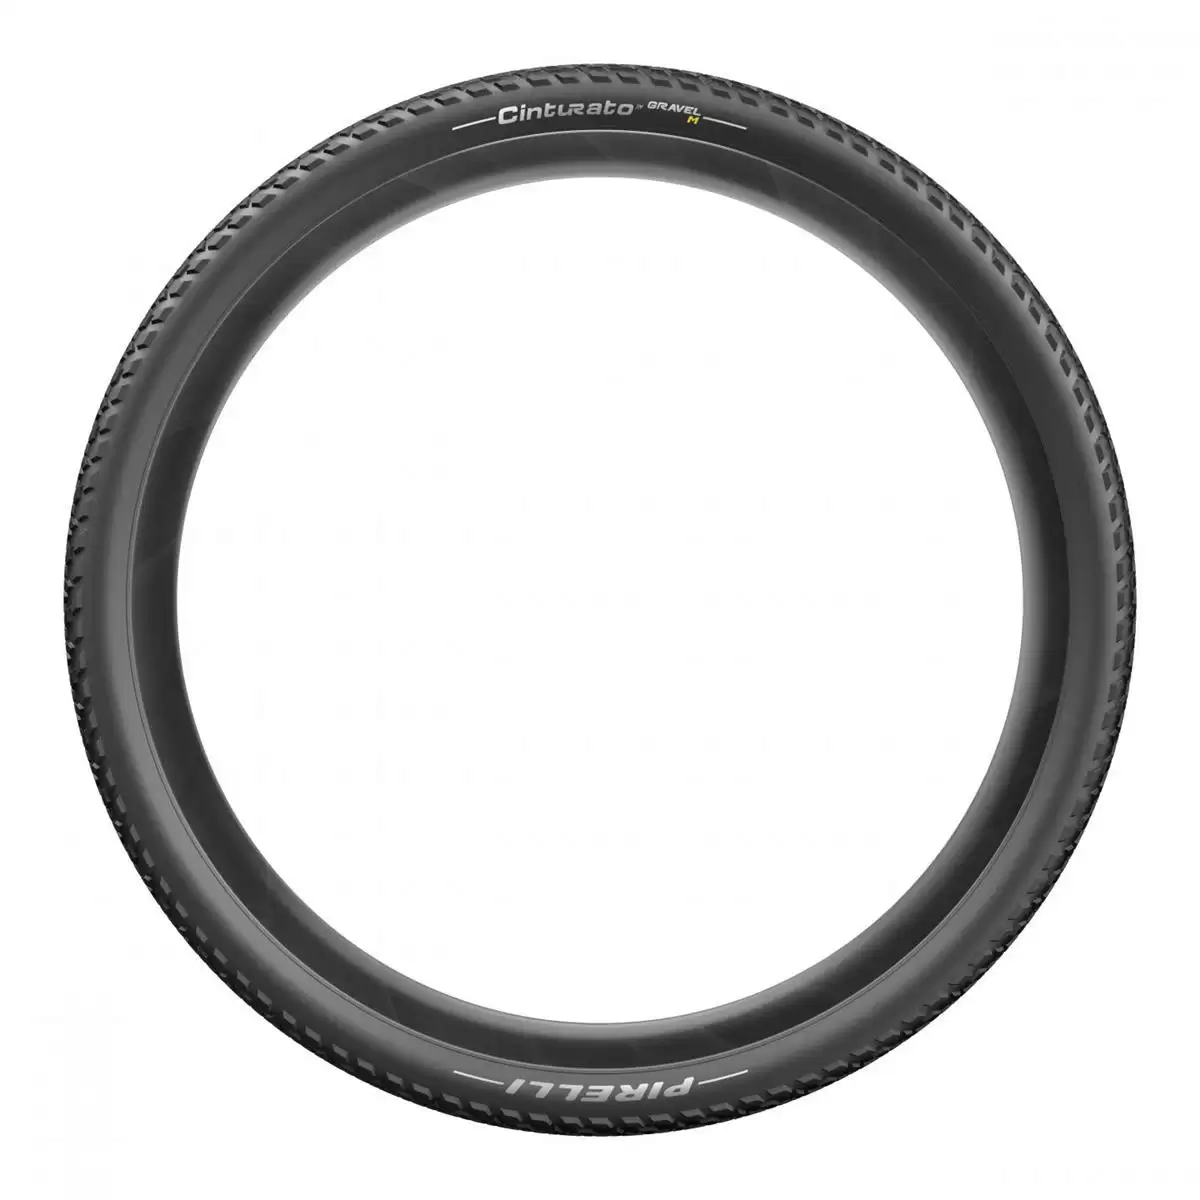 Tire Cinturato Gravel Mixed Terrain 700x45c Tubeless Ready Black #3